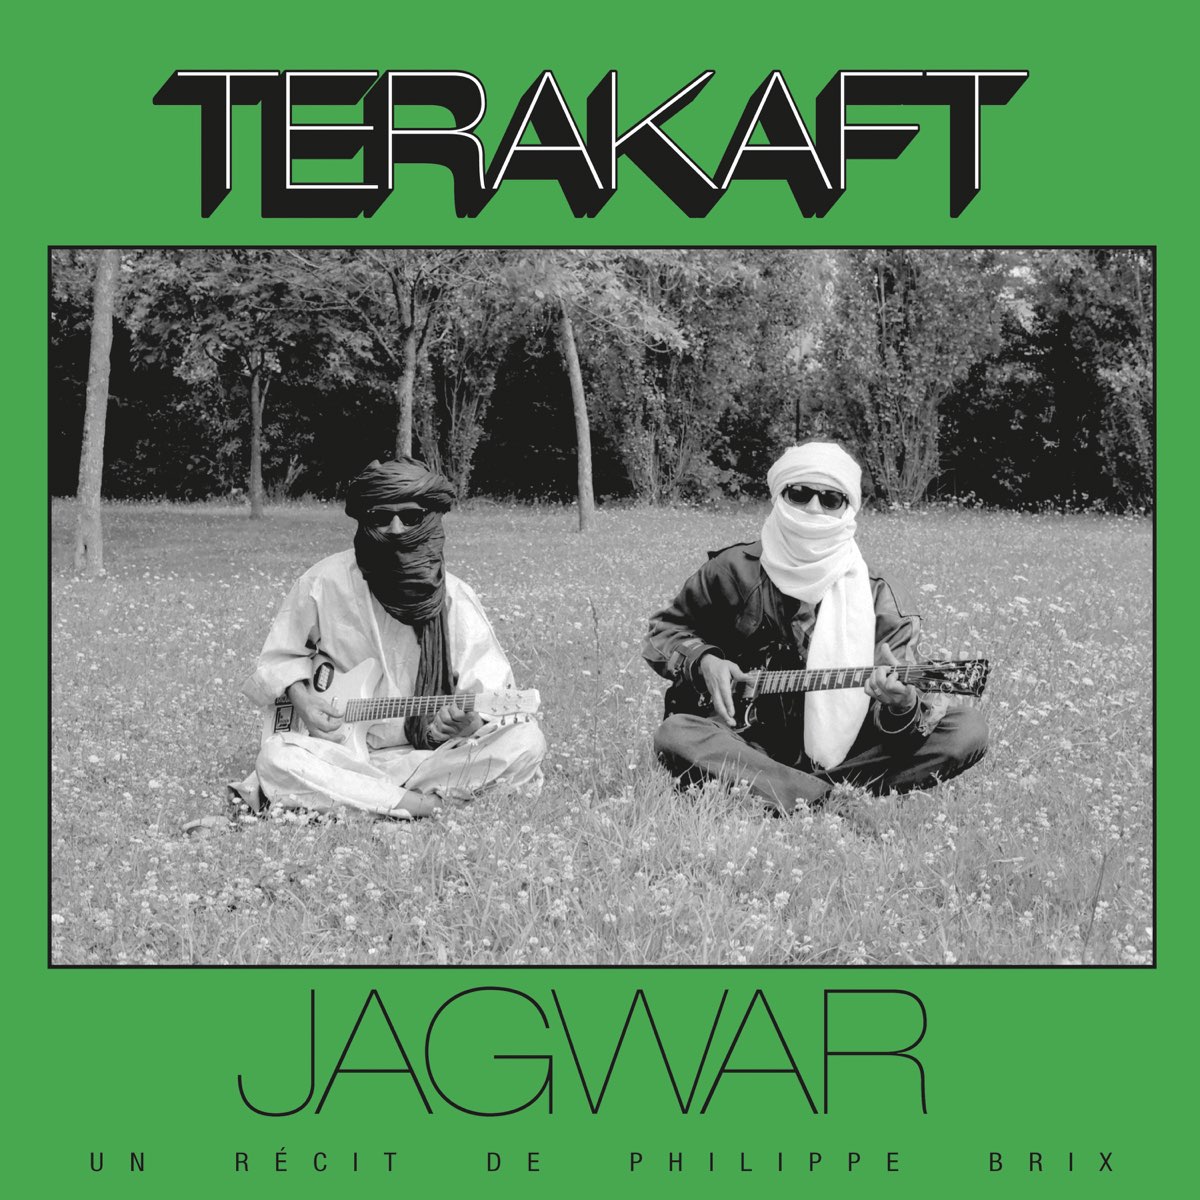 Terakaft. Terakaft Amazzagh. Terakaft Википедия. Картинка песни Jagwar. Jagwar twin bad feeling кавер на русском